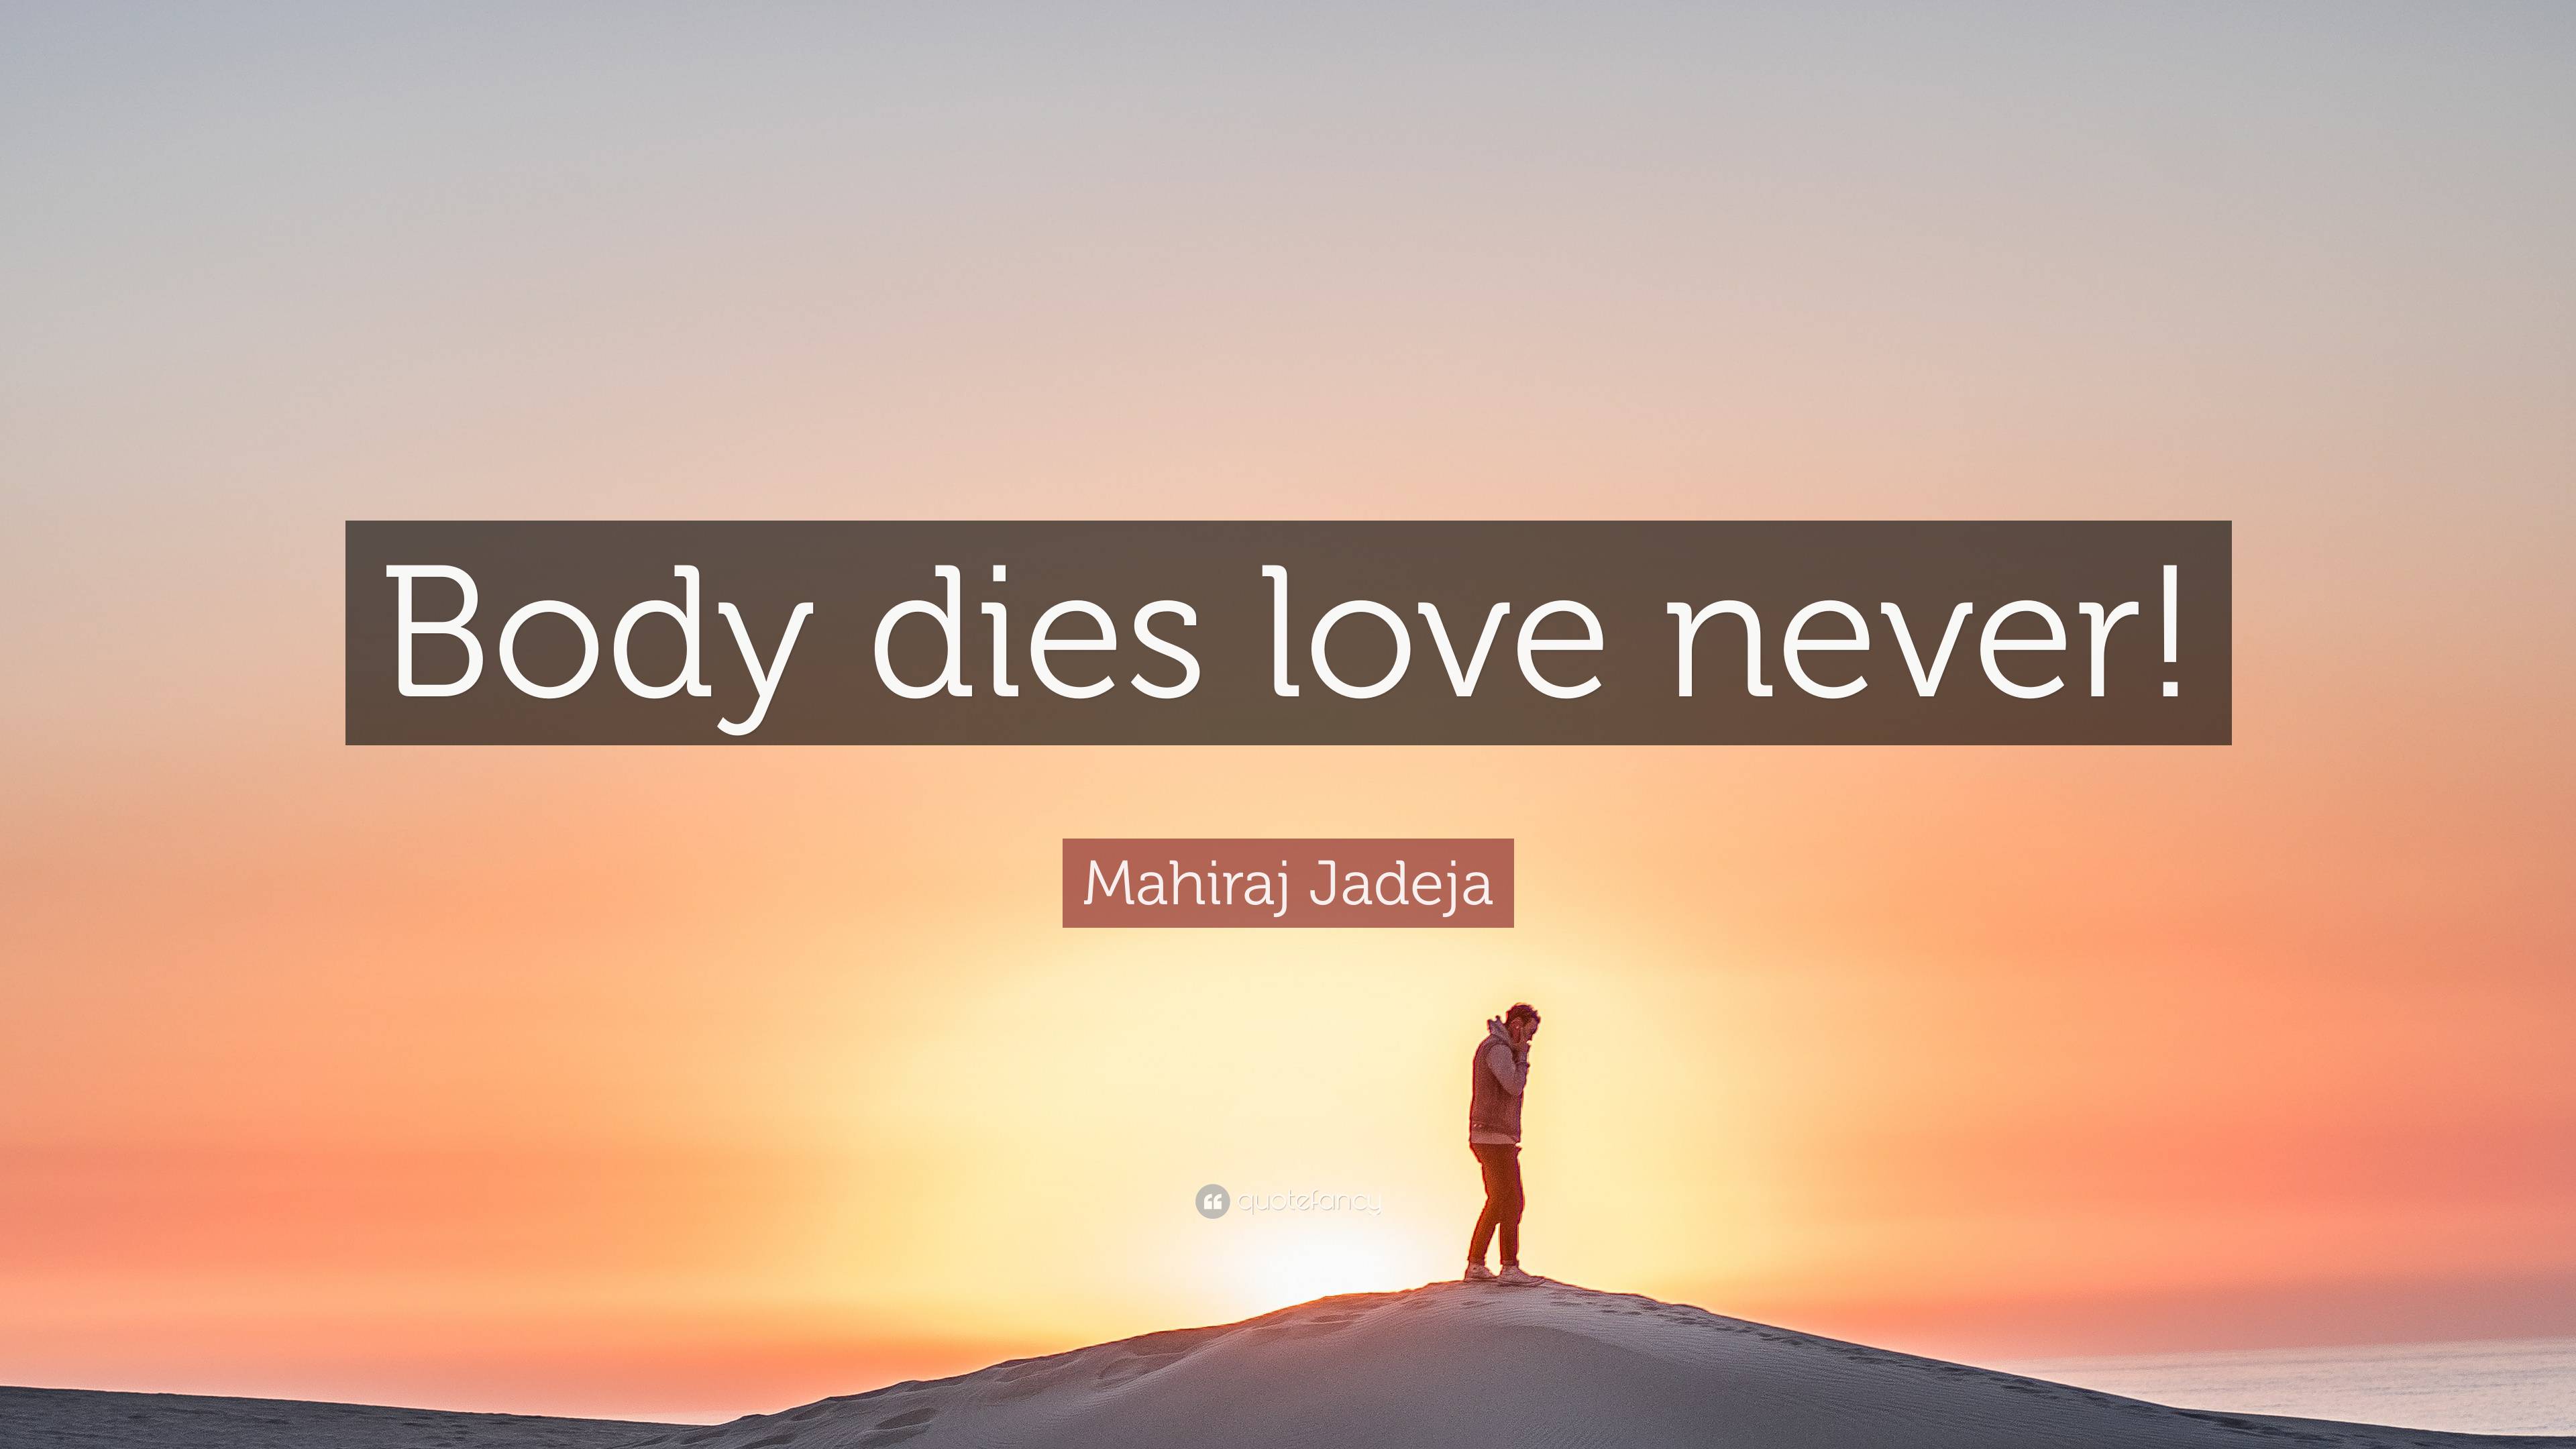 Mahiraj Jadeja Quote: “Body dies love never!”